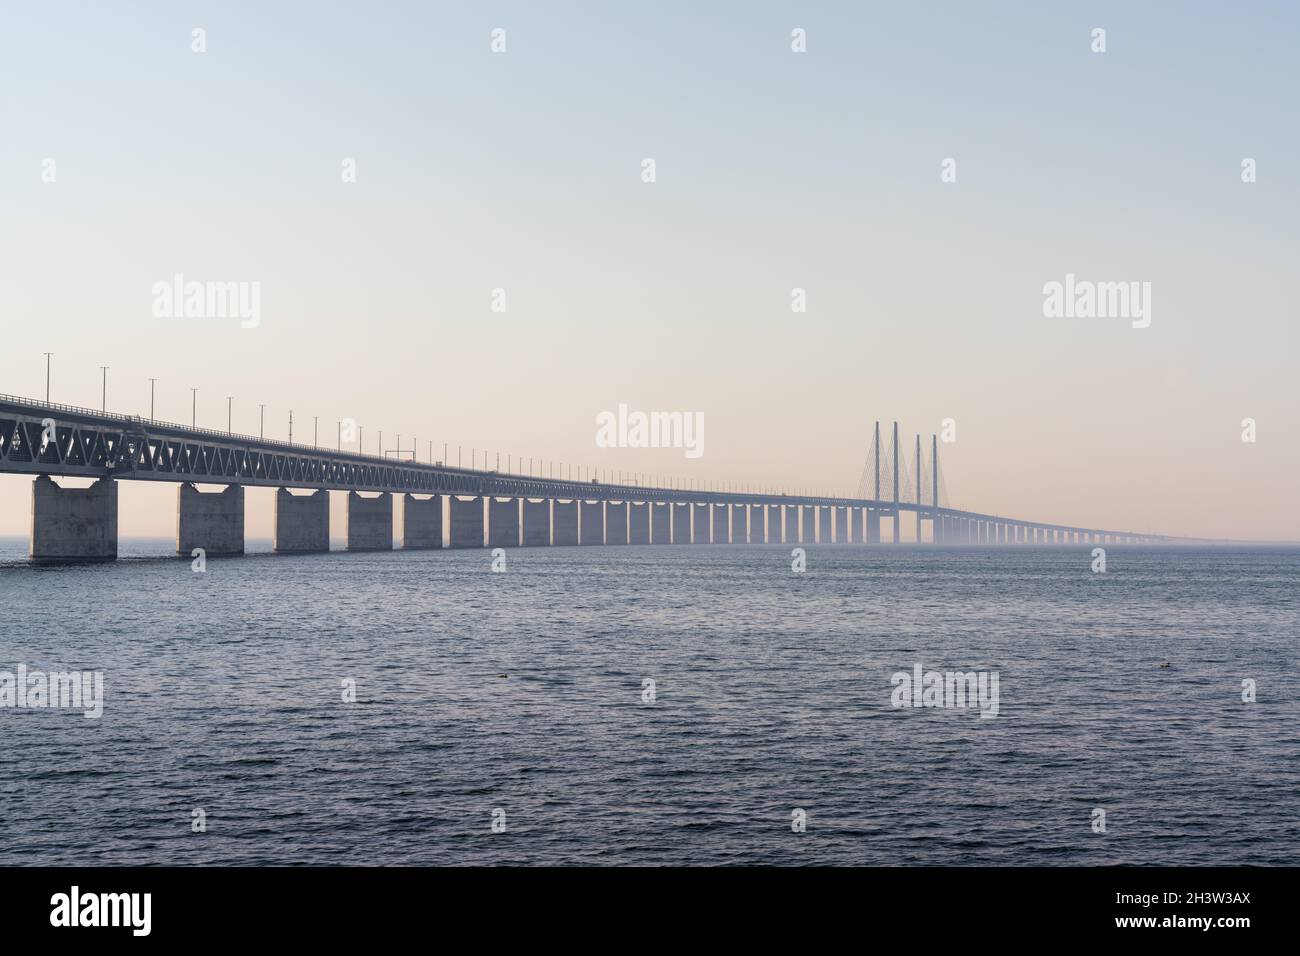 View of the landmark Oresund Bridge between Denmark and Sweden Stock Photo